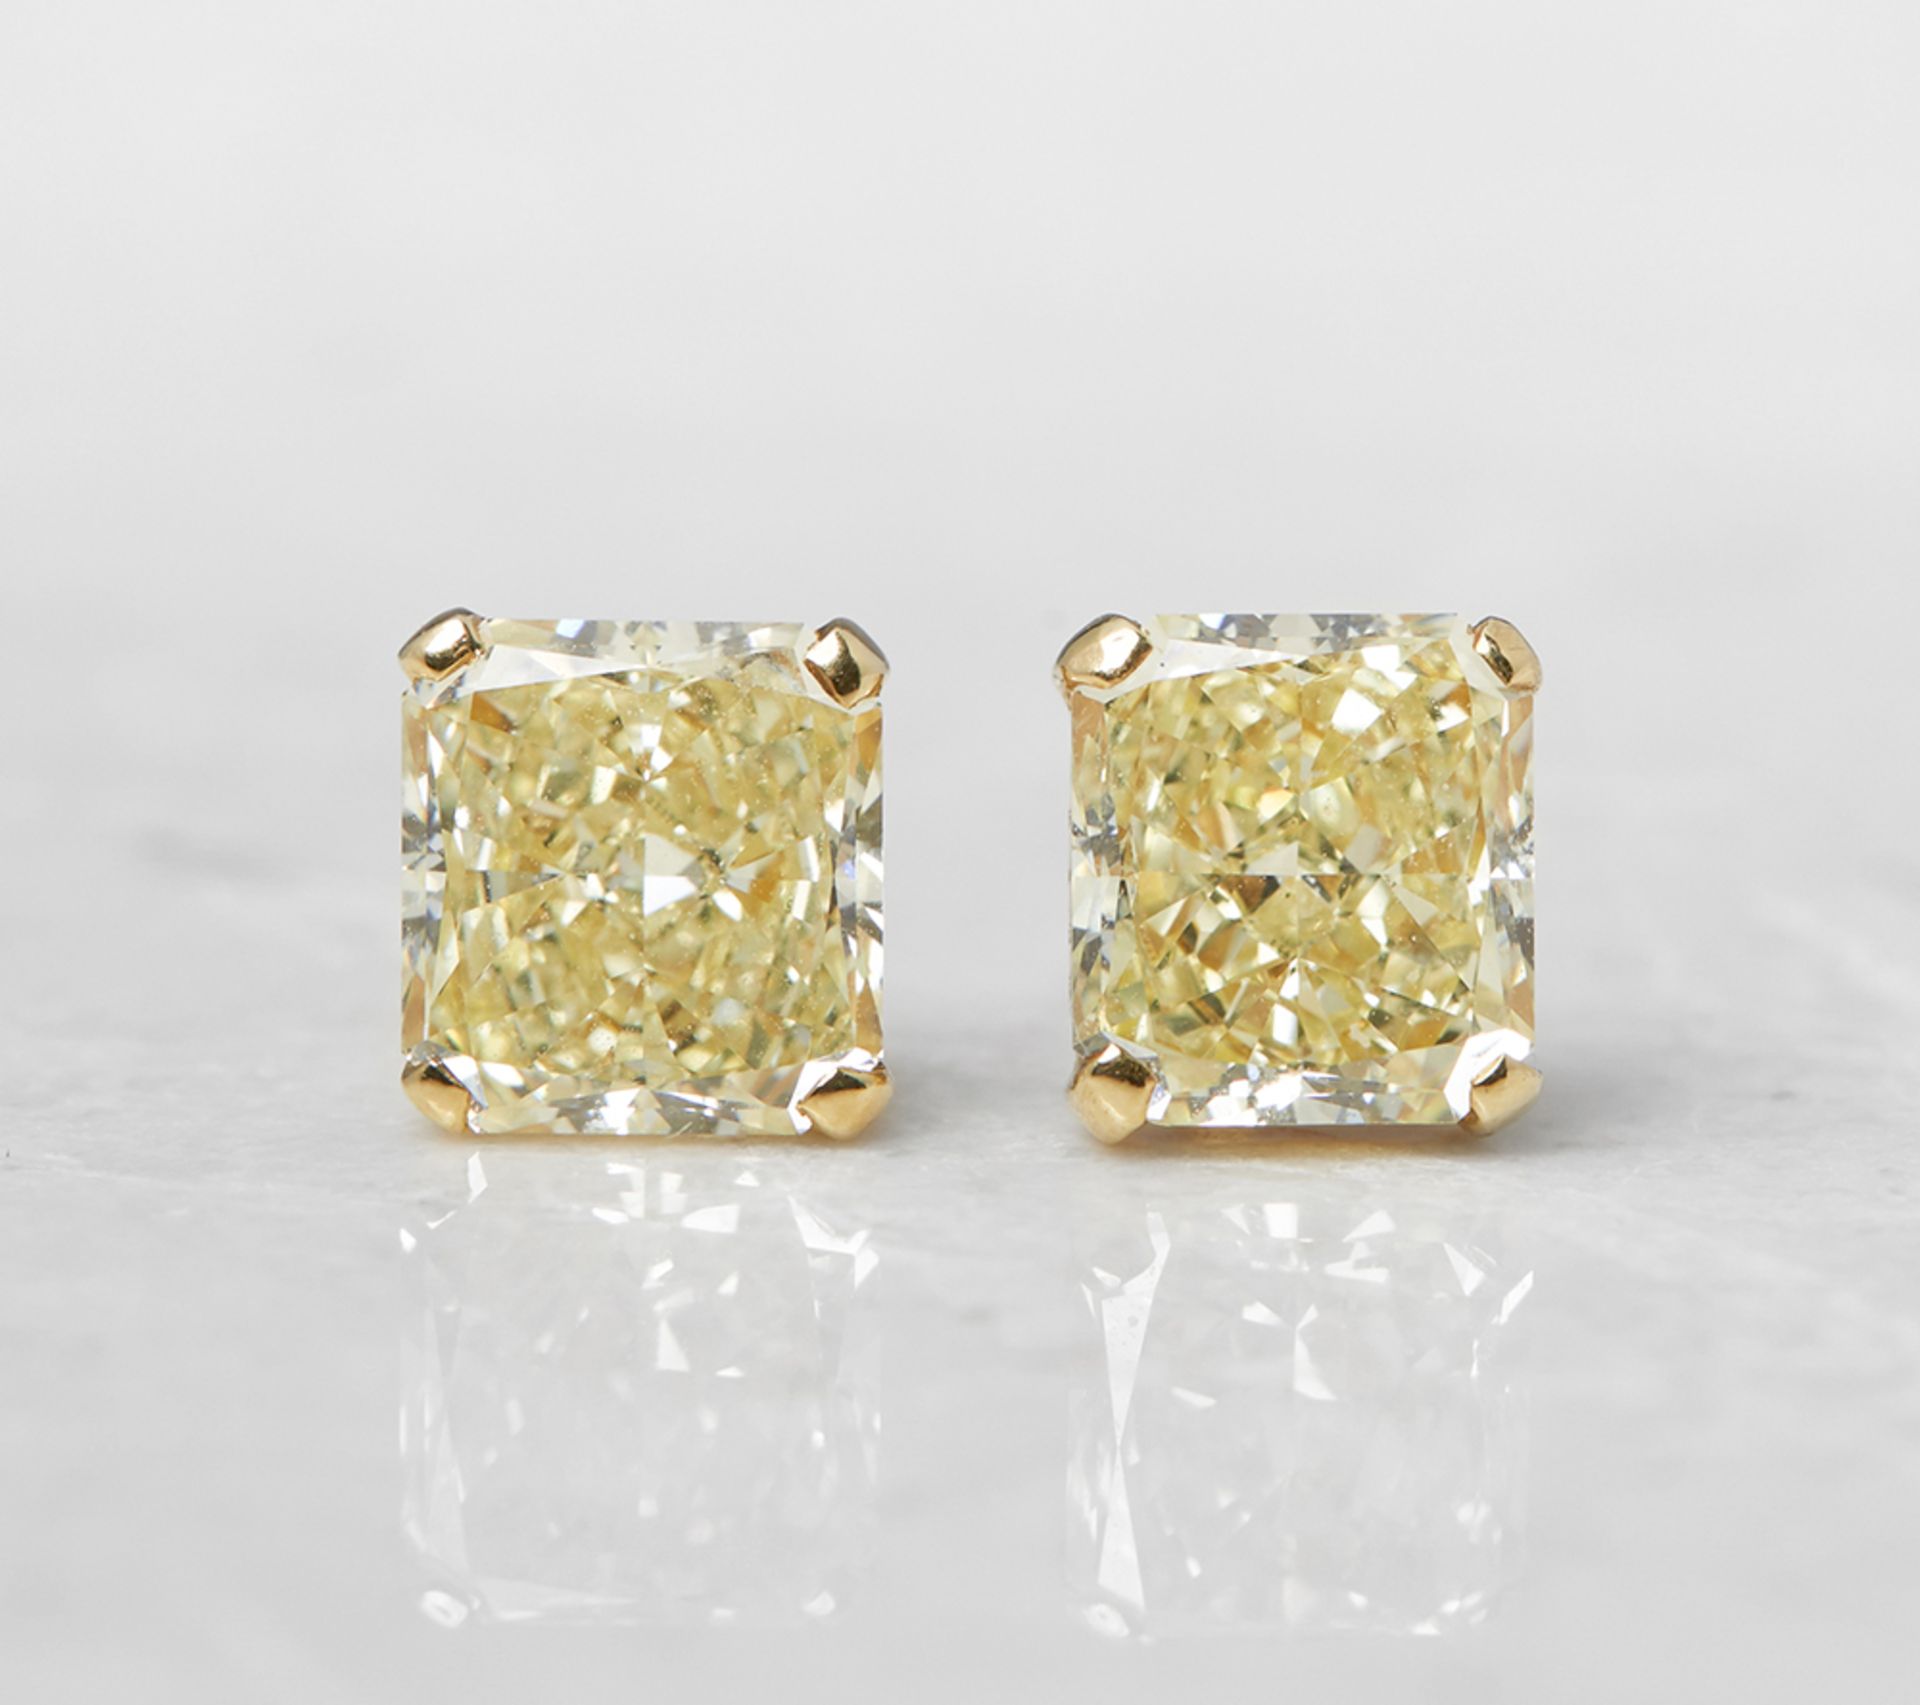 Graff Diamonds 18k Yellow Gold 2.66ct Yellow Diamond Stud Earrings with GIA Certification - Image 10 of 15